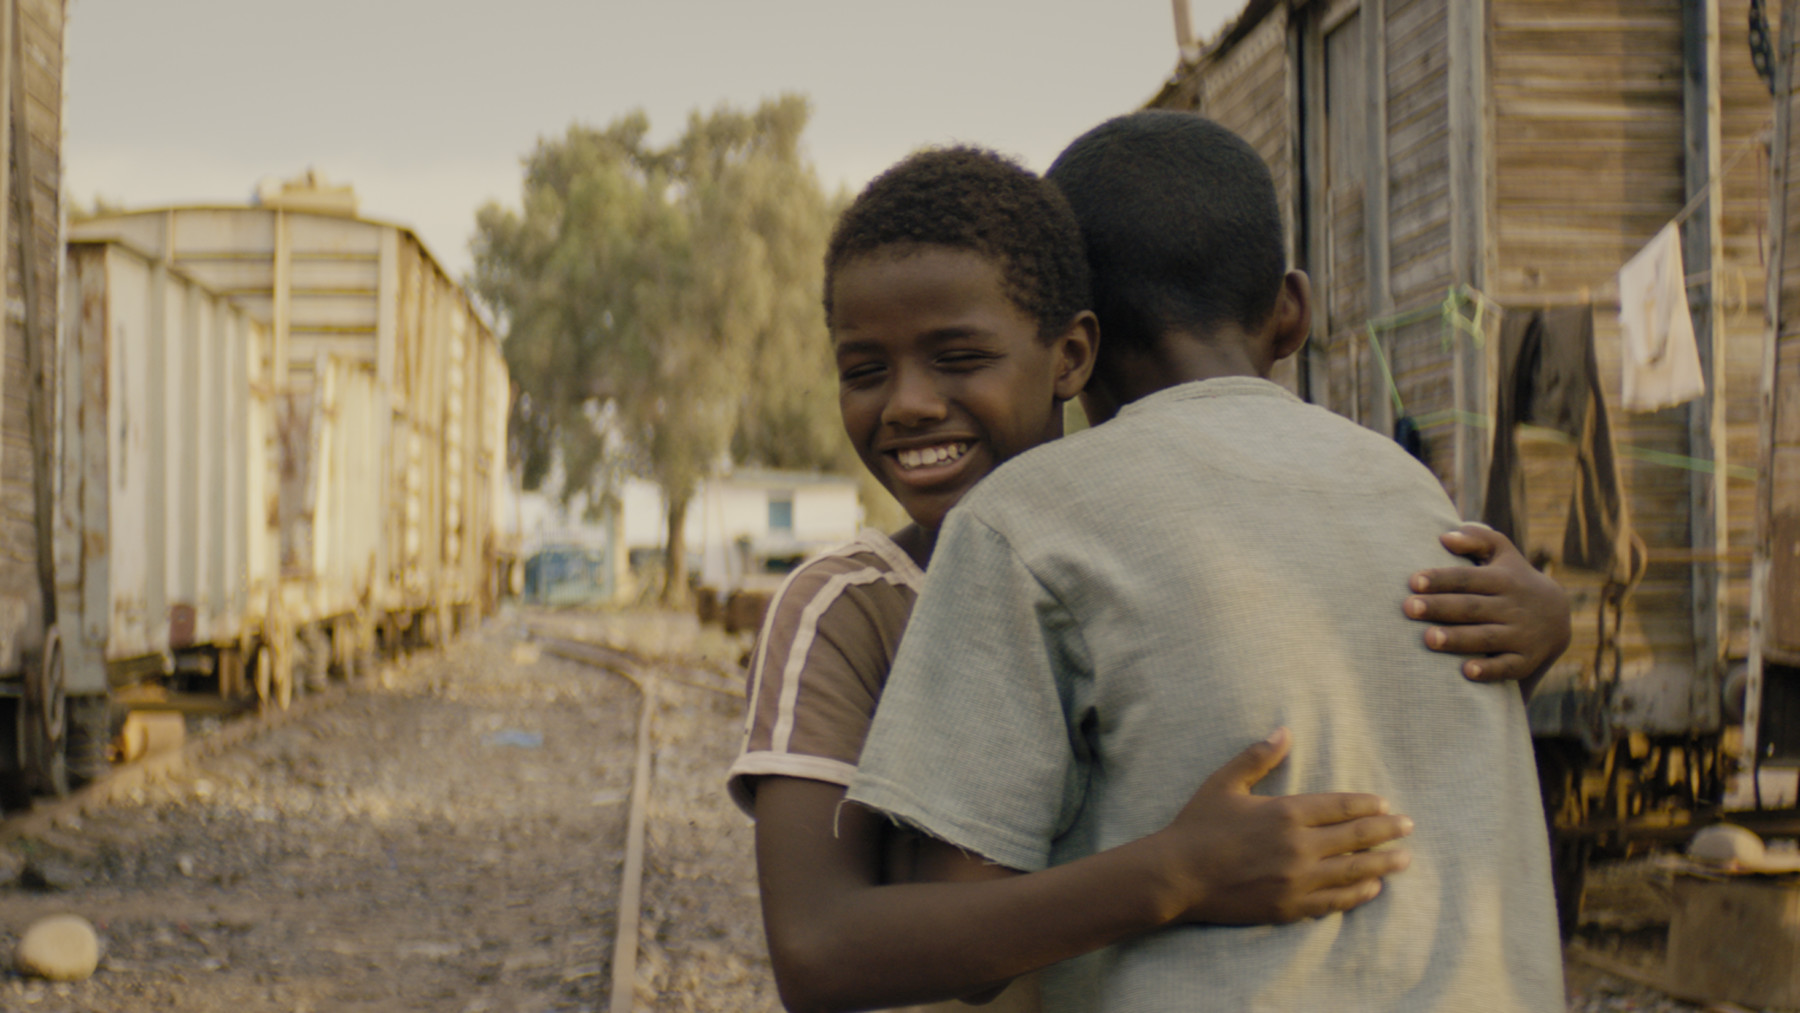 A boy hugs another boy on a gravel street.